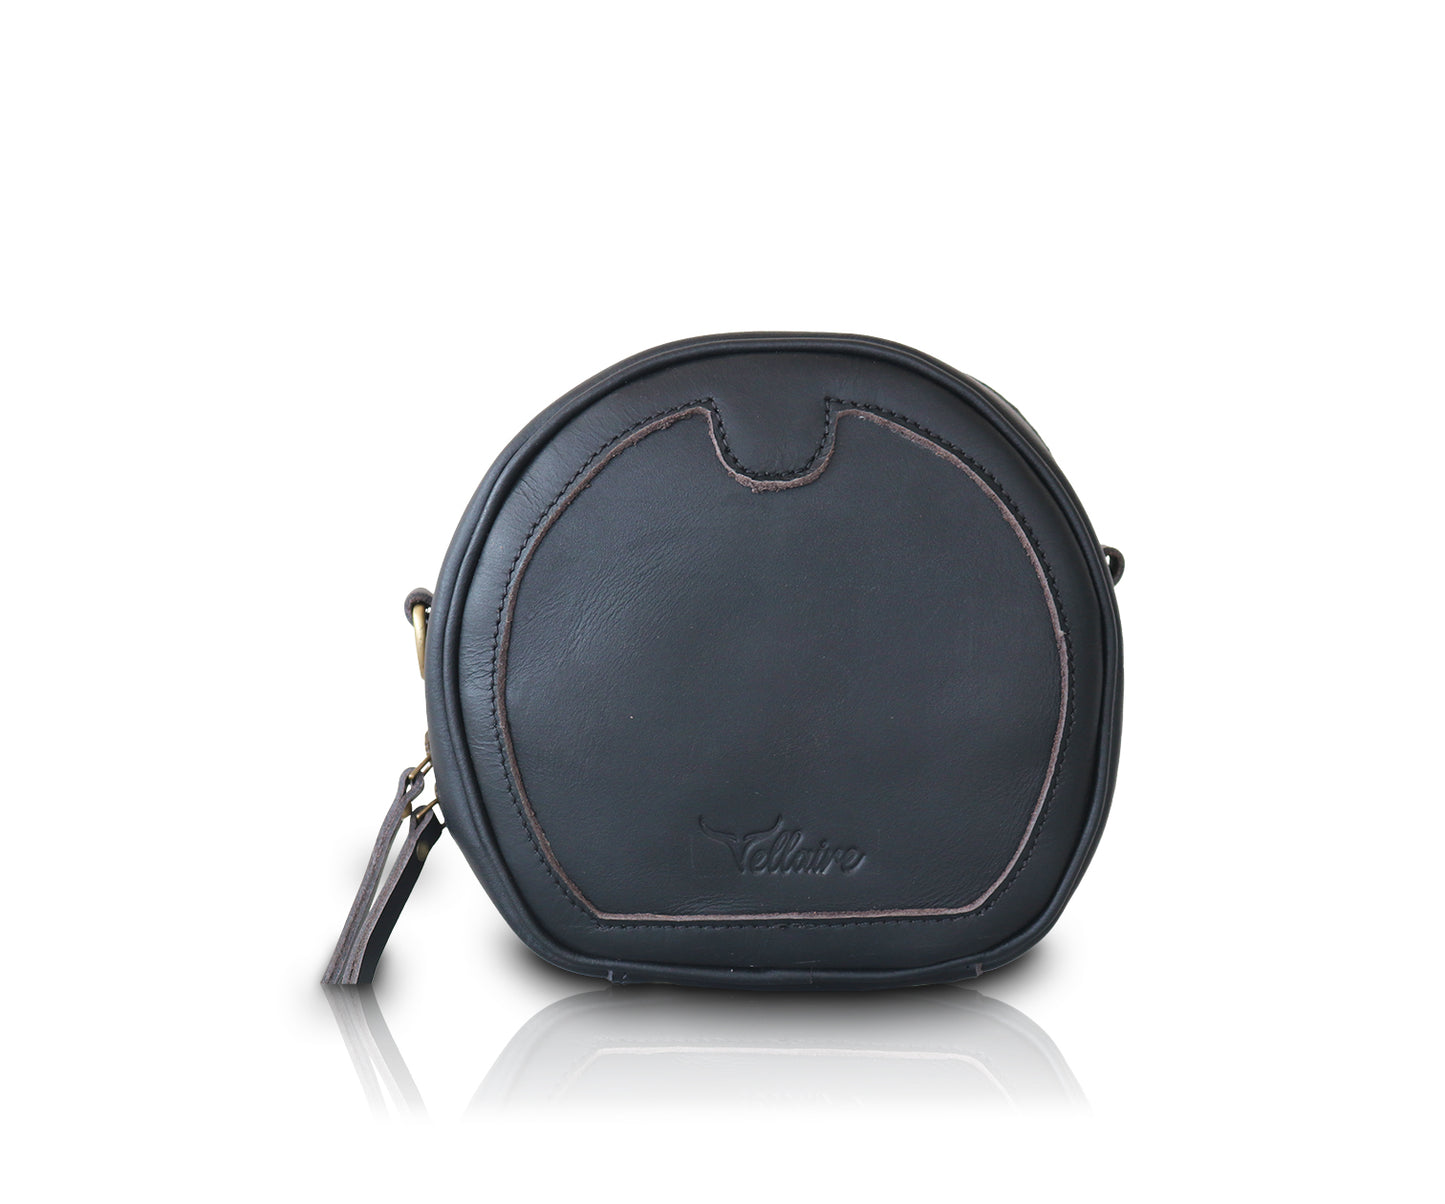 Leather Circle Crossbody Bag | Light Brown